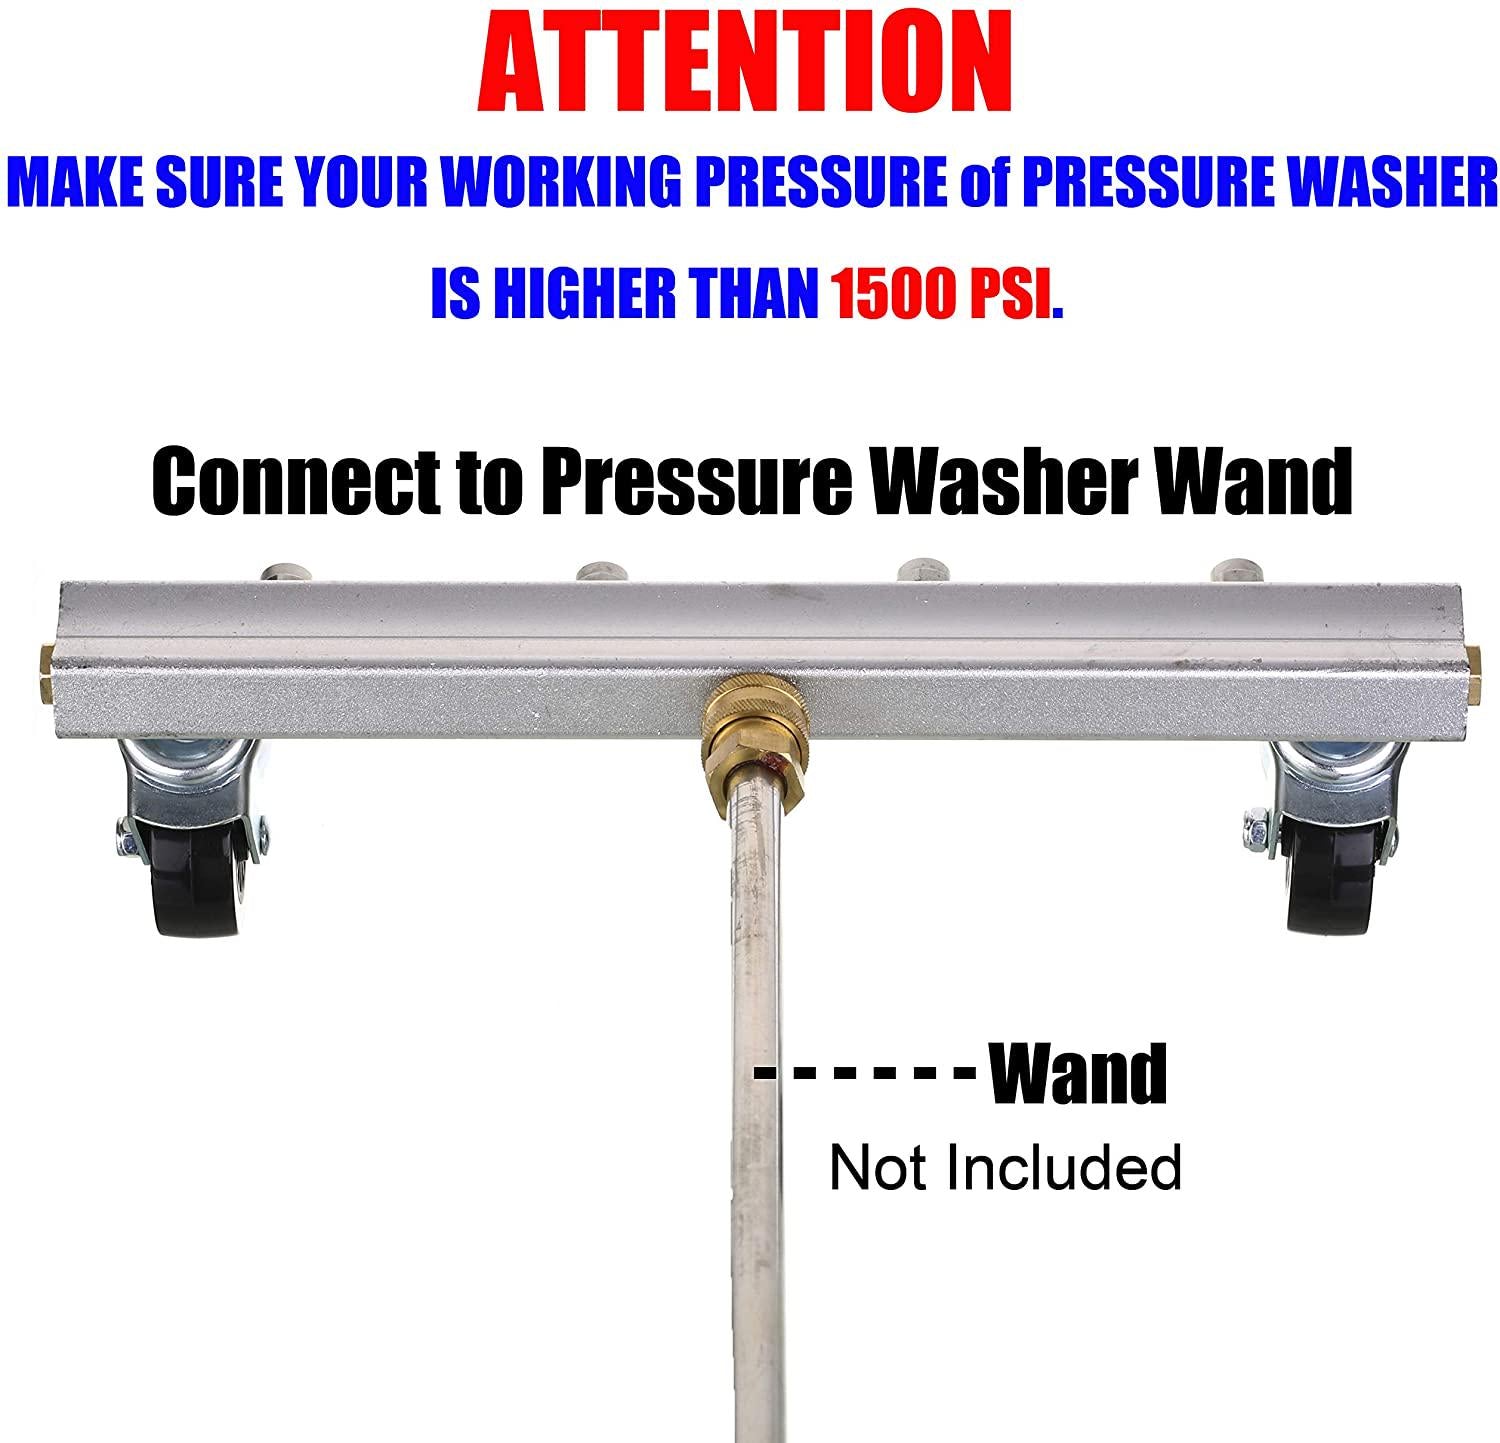 M MINGLE, M MINGLE Pressure Washer Water Broom, 13 Power Washer Cleaner, Sweep Driveway, Sidewalk, Deck, 4000 PSI